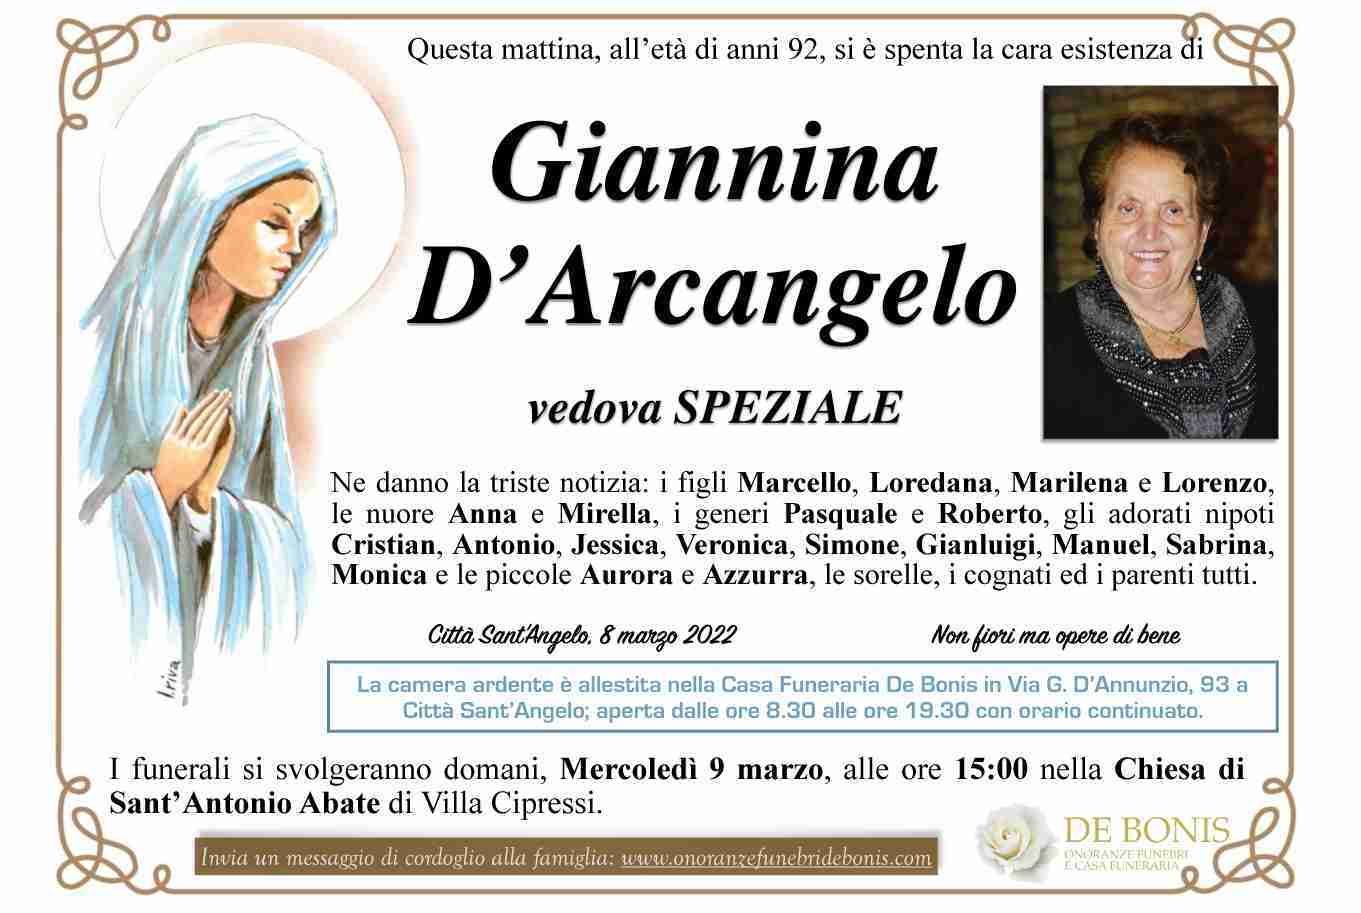 Giannina D'Arcangelo